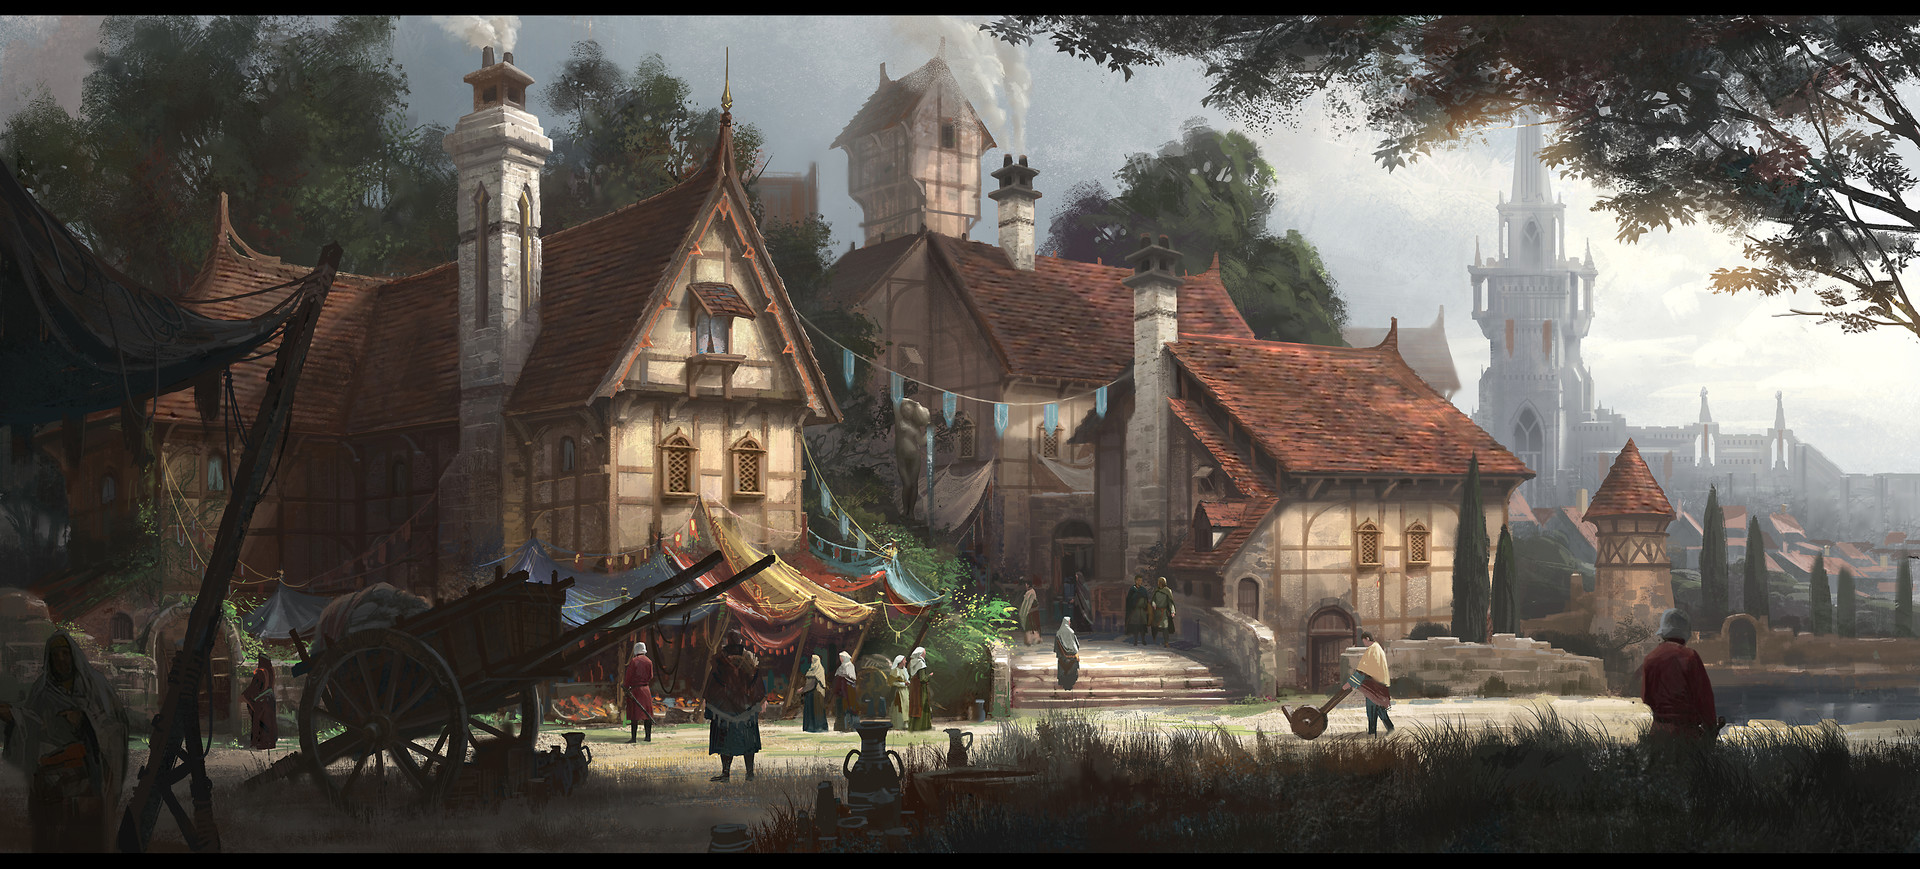 Medieval village 1920 × 869